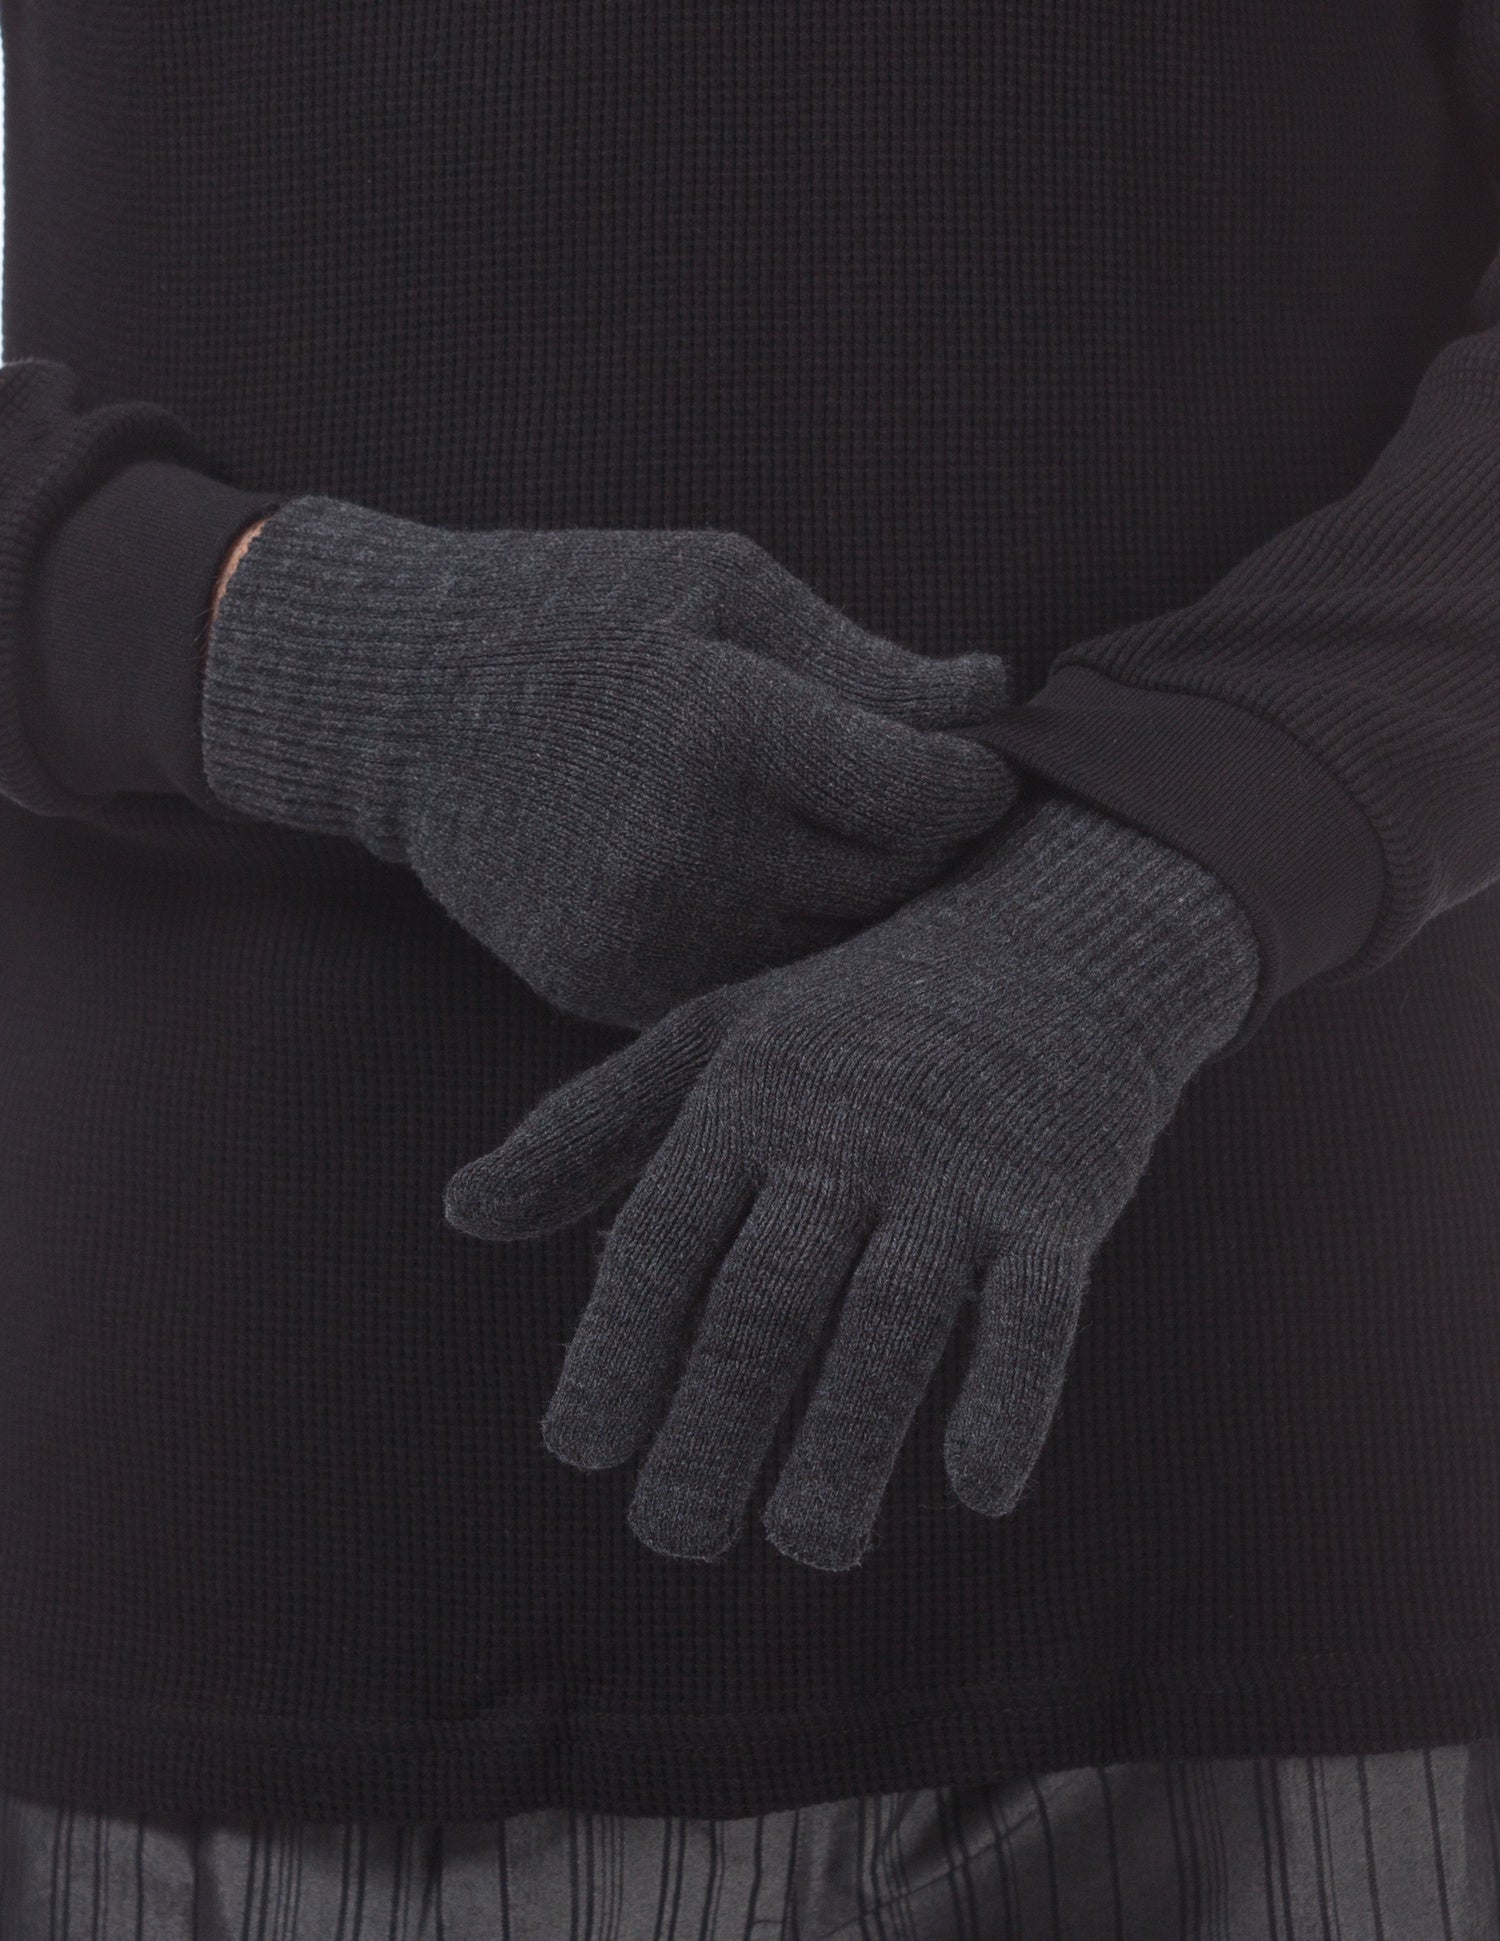 Pro Club Knit Glove - Charcoal